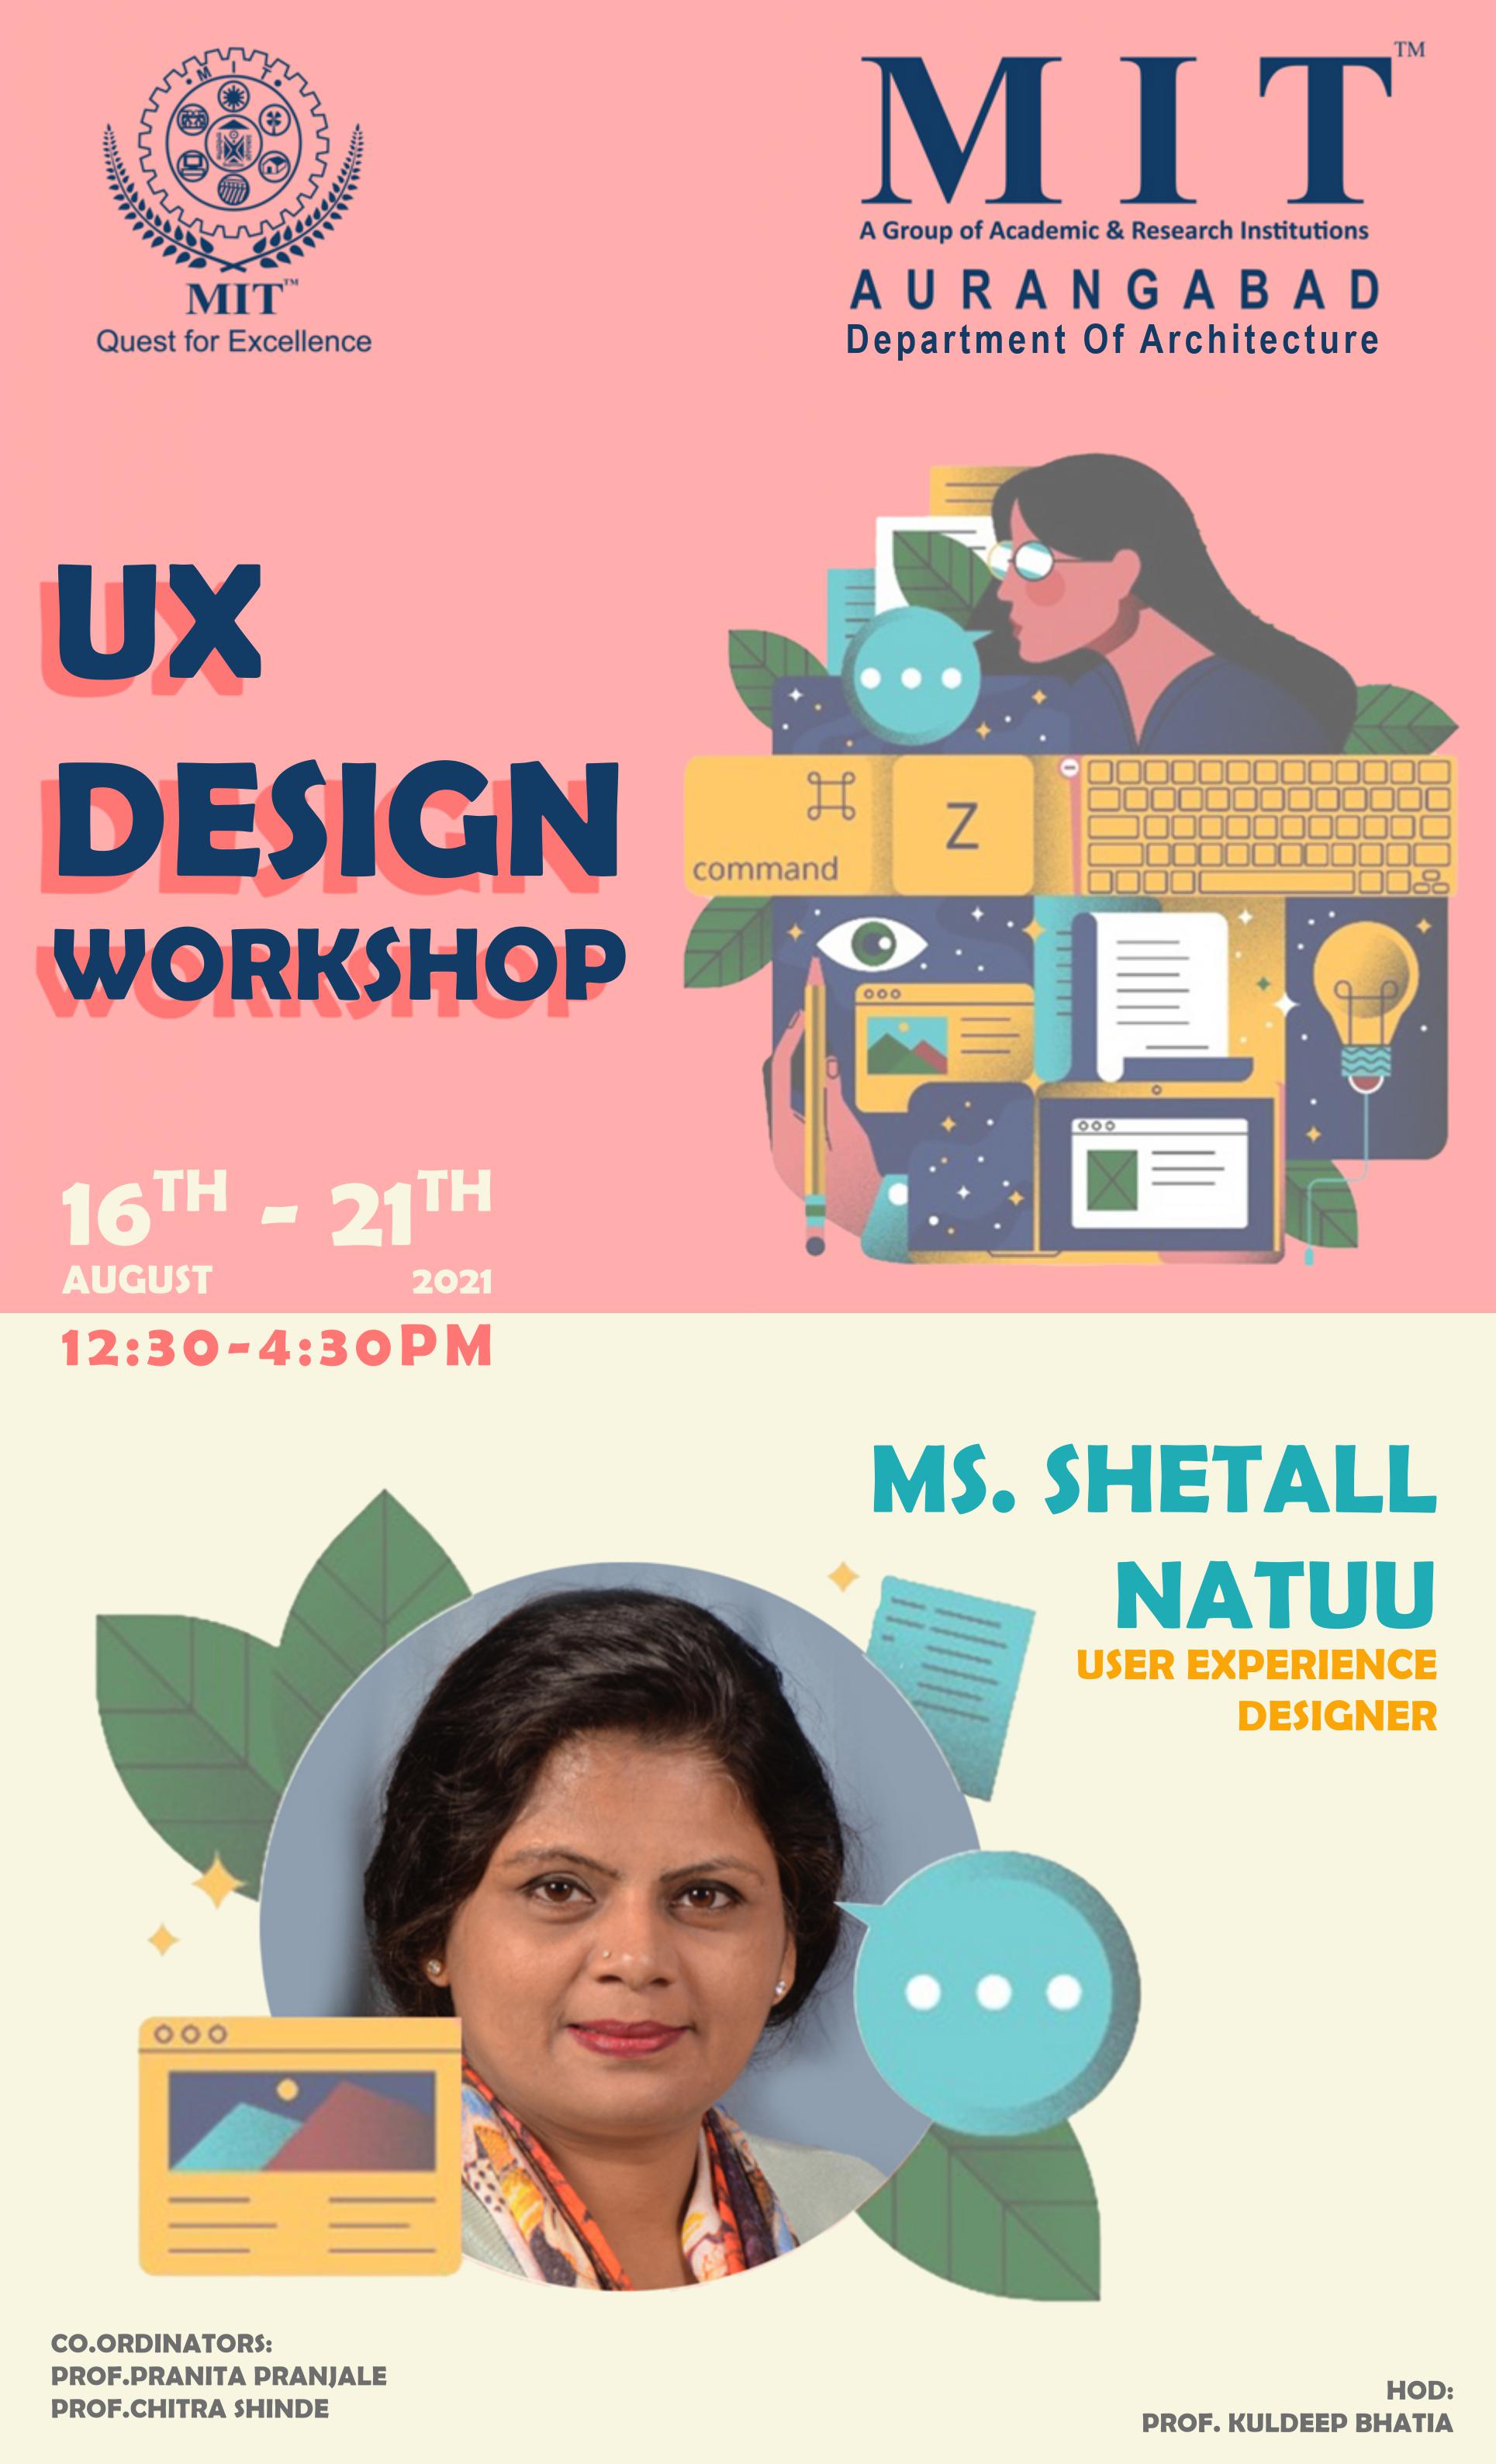 “UX Design” workshop by Ms. Shetall Natuu 